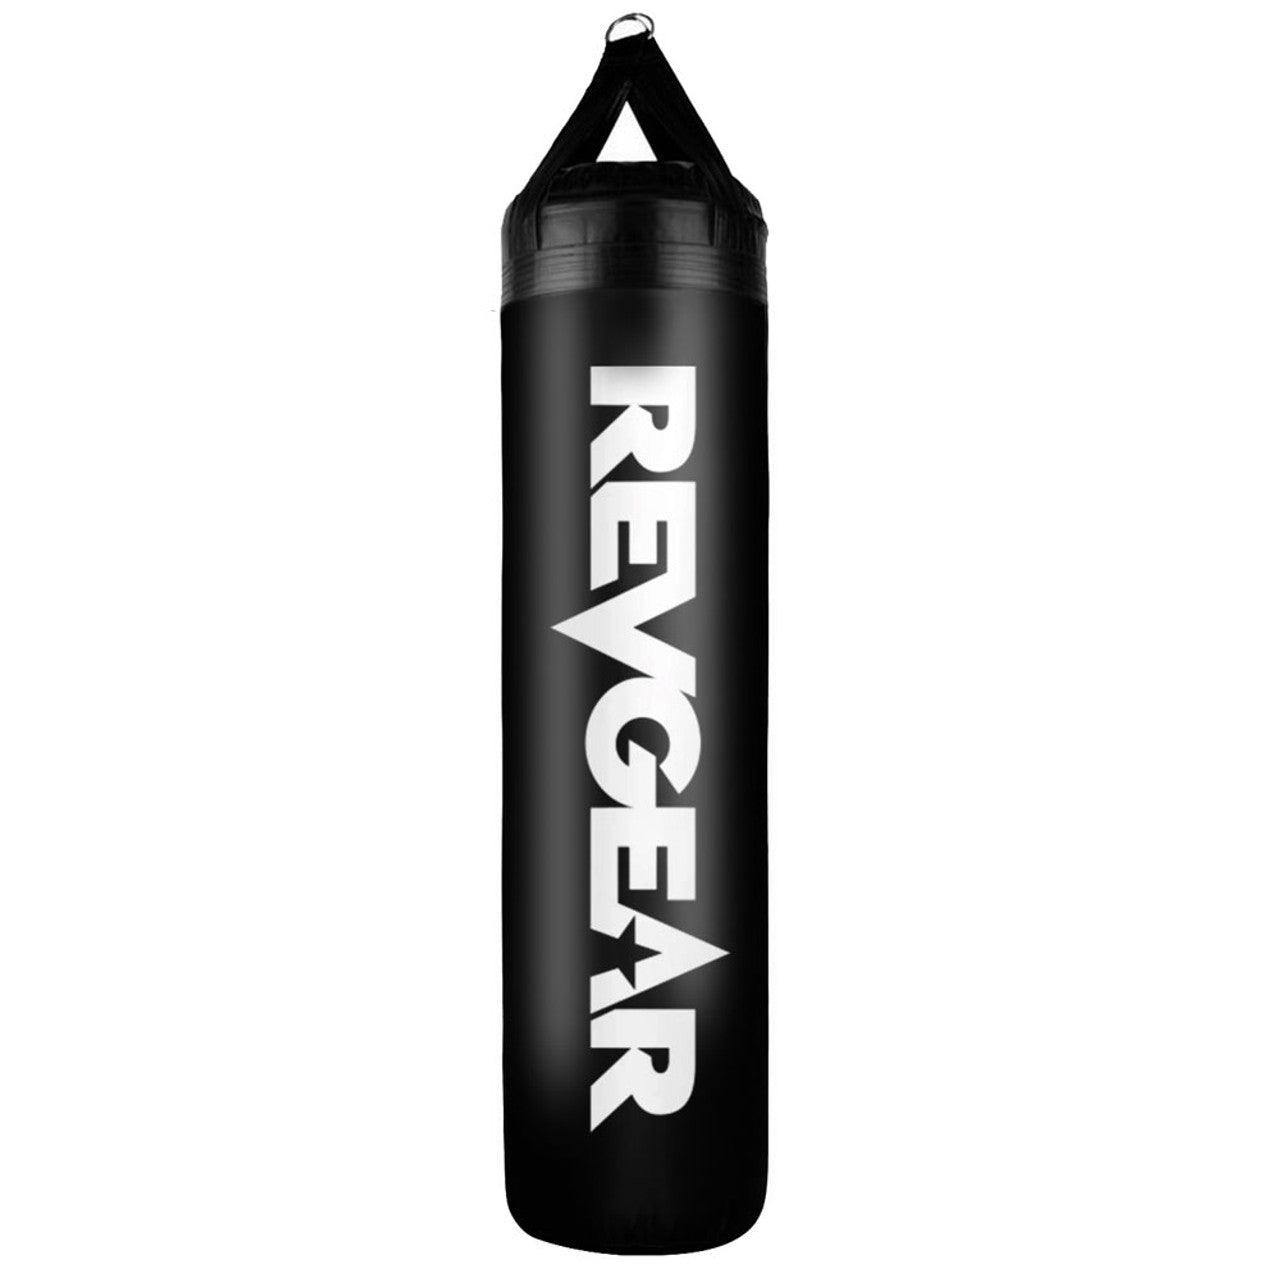 Revgear Pro Series 6 Heavy Bag - Black - 6 ft. - Violent Art Shop